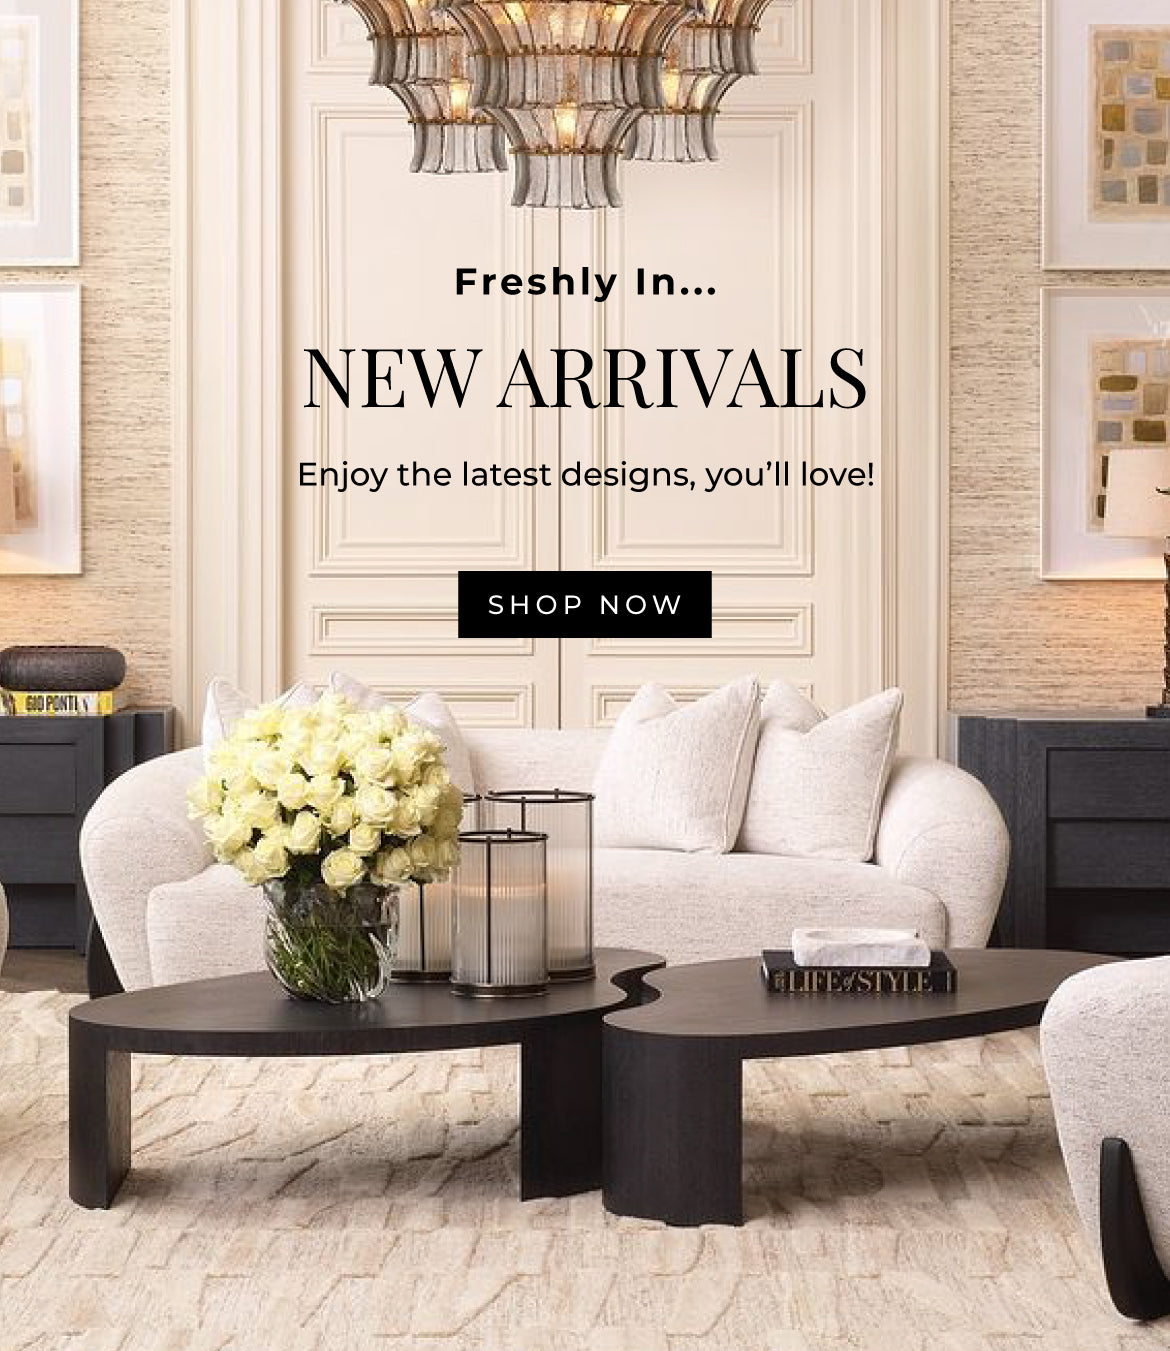 Eichholtz Furniture, OROA, Luxury Furniture, Lighting & Decor, New Arrivals, High-end Furniture